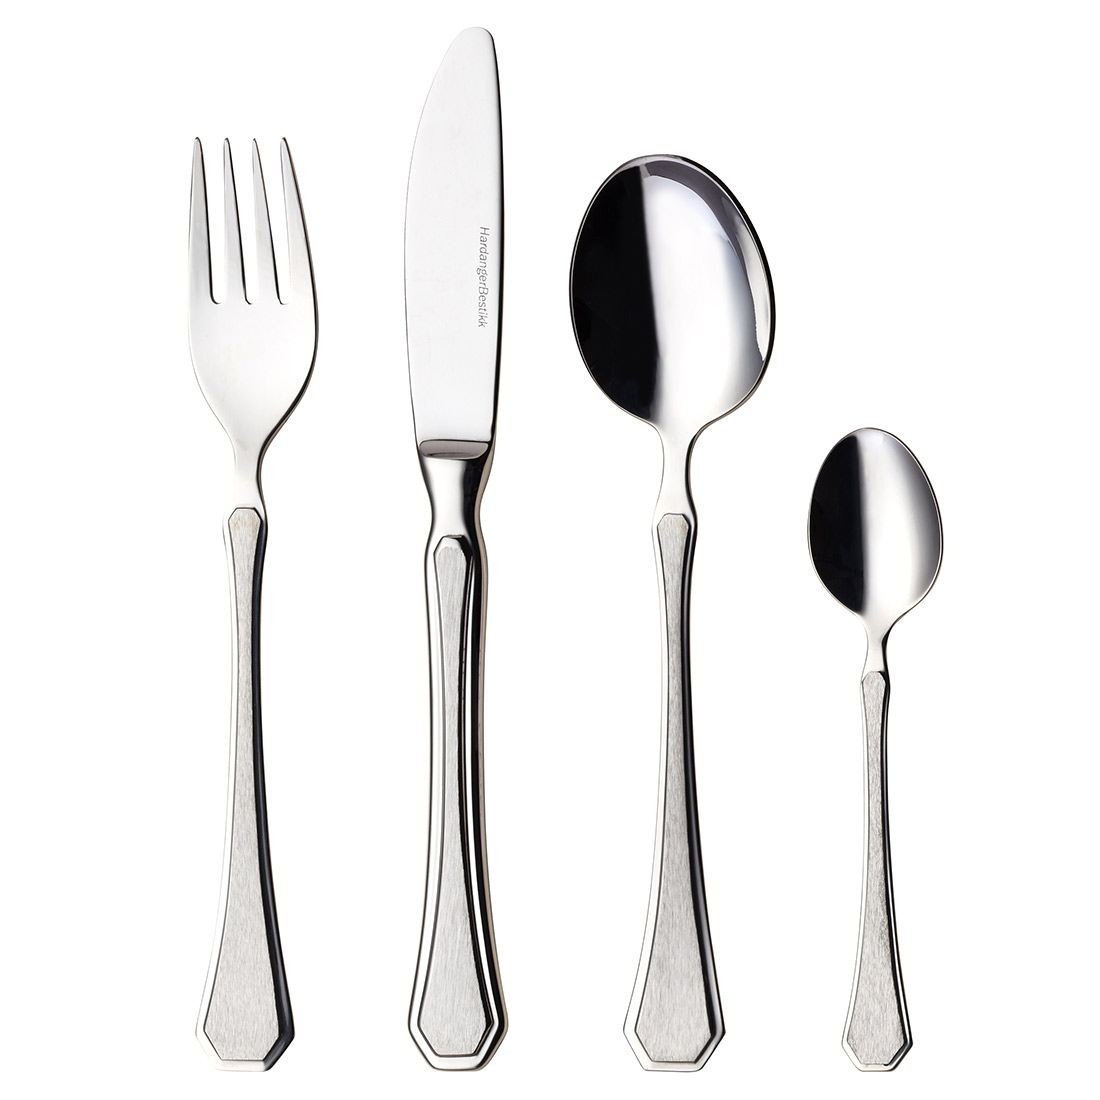 Silje cutlery set product image